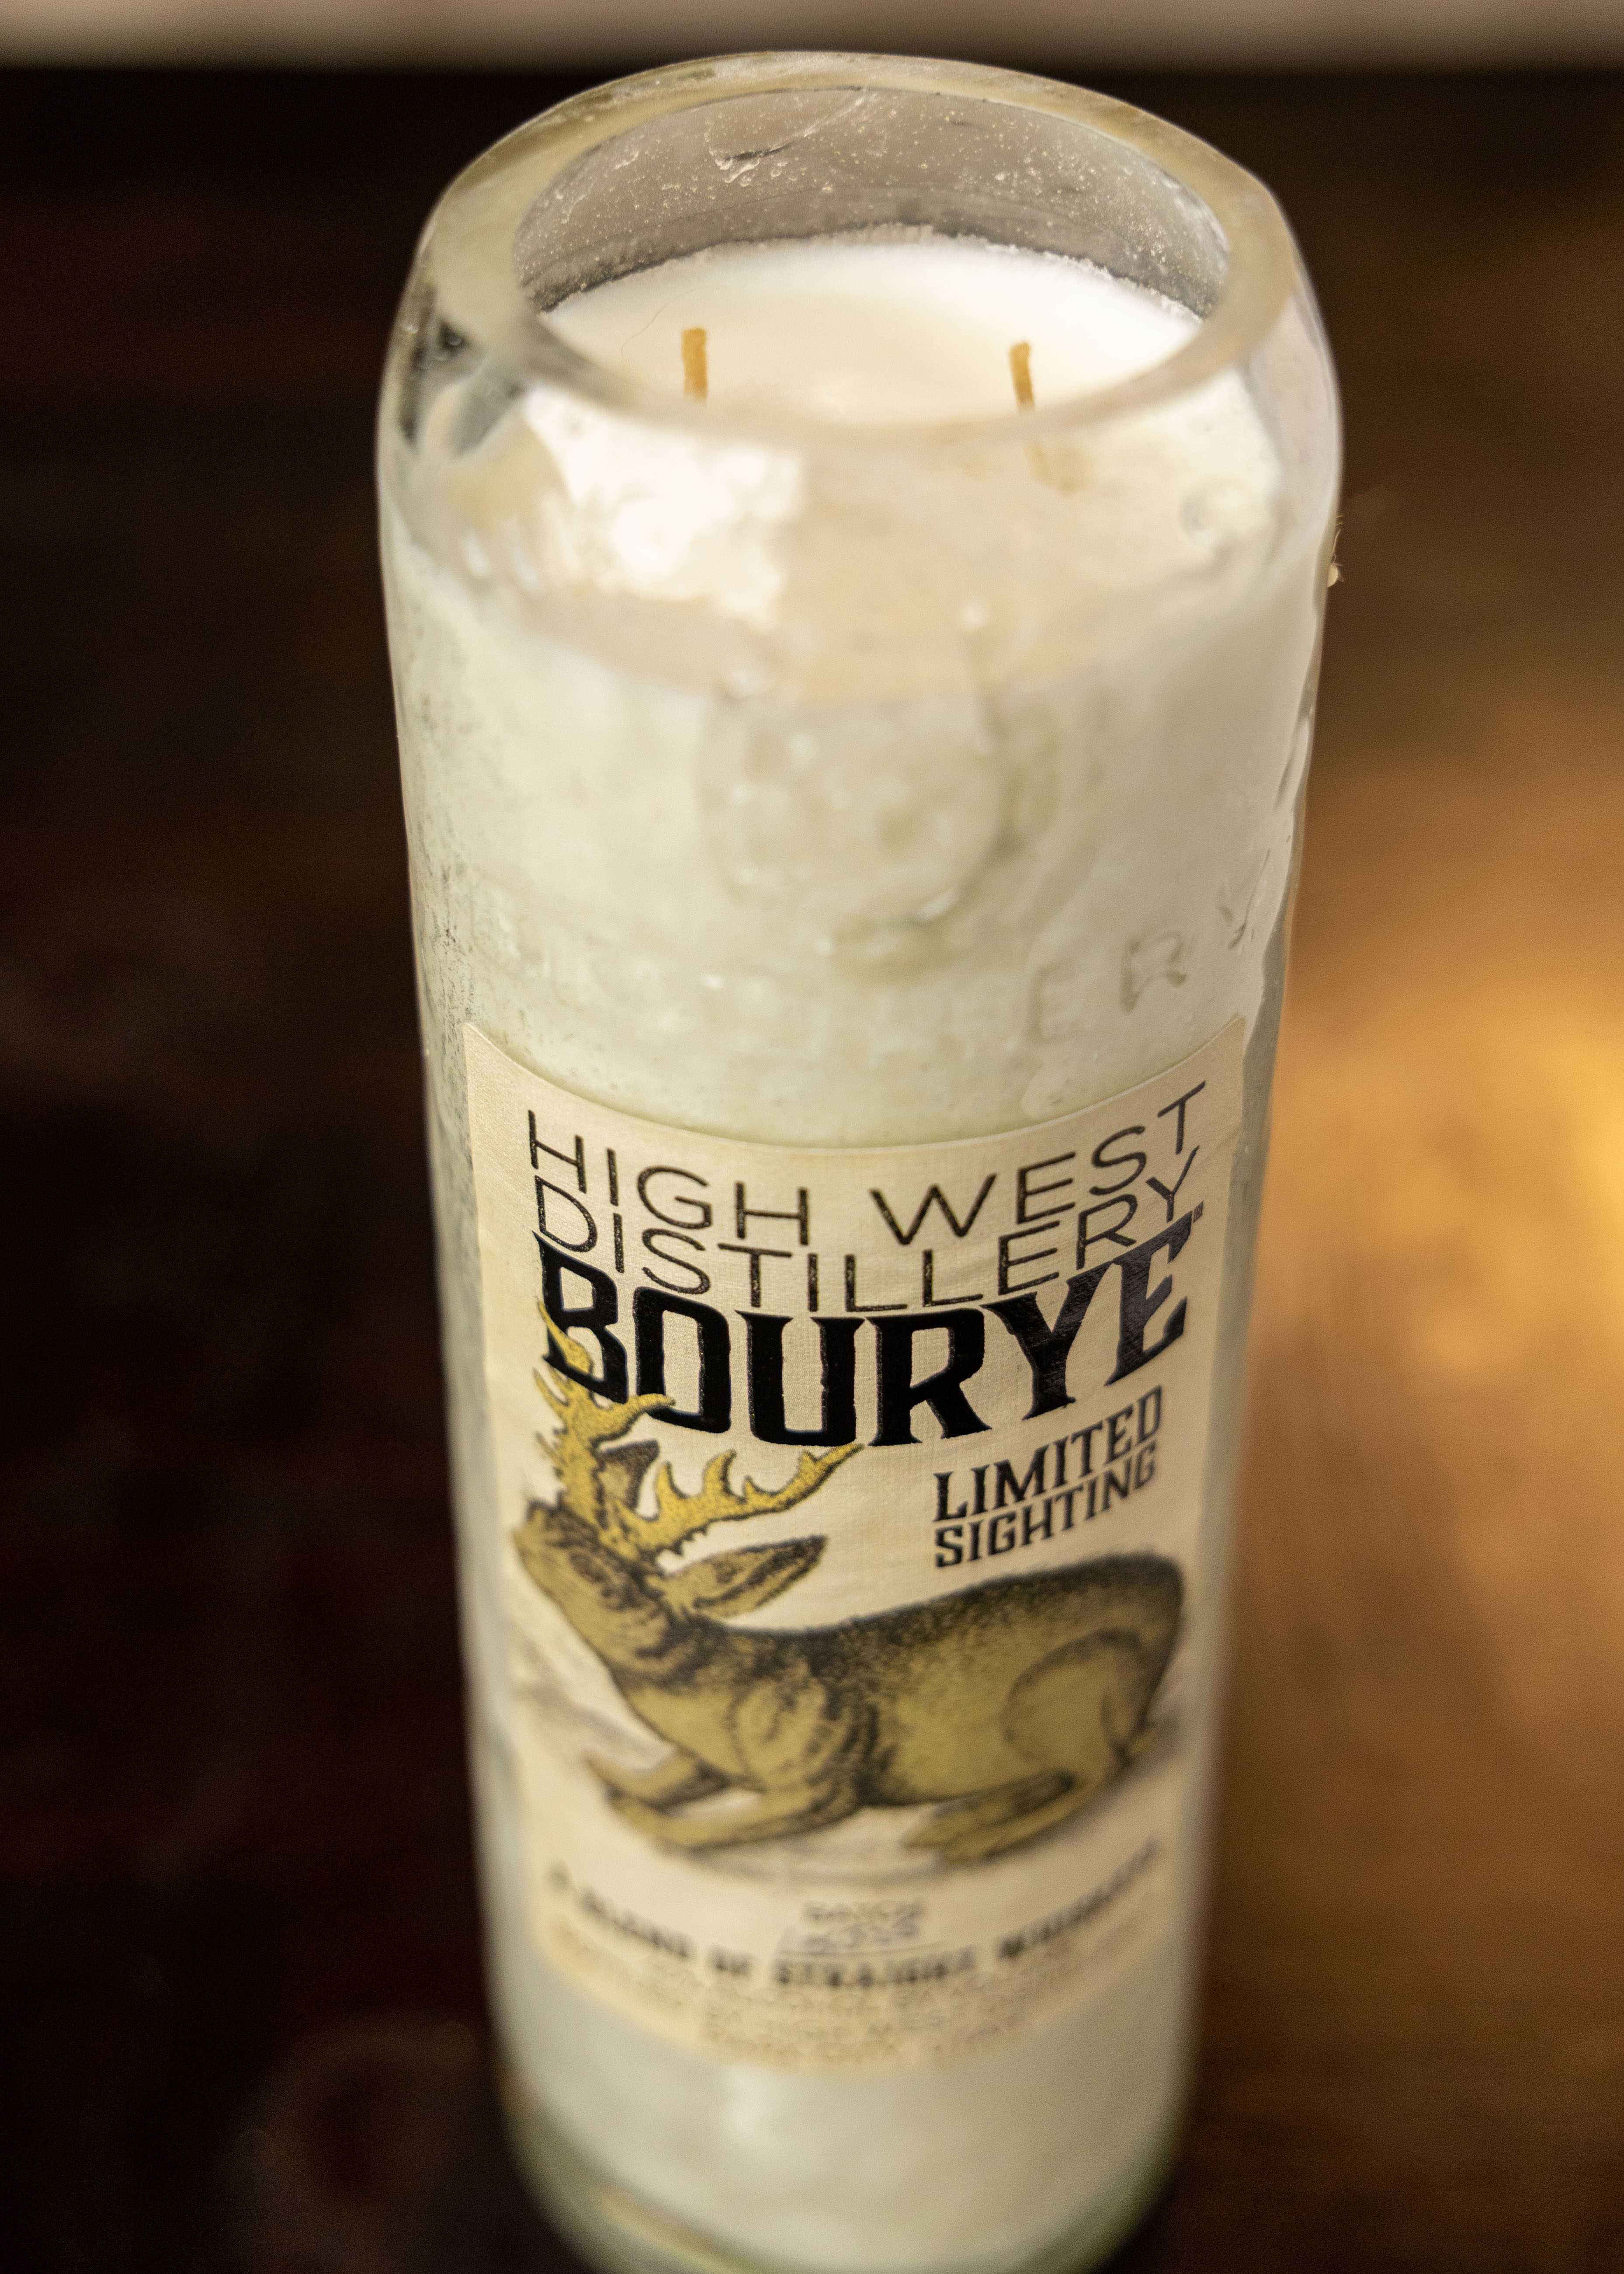 High West Bourye Bottle Candle